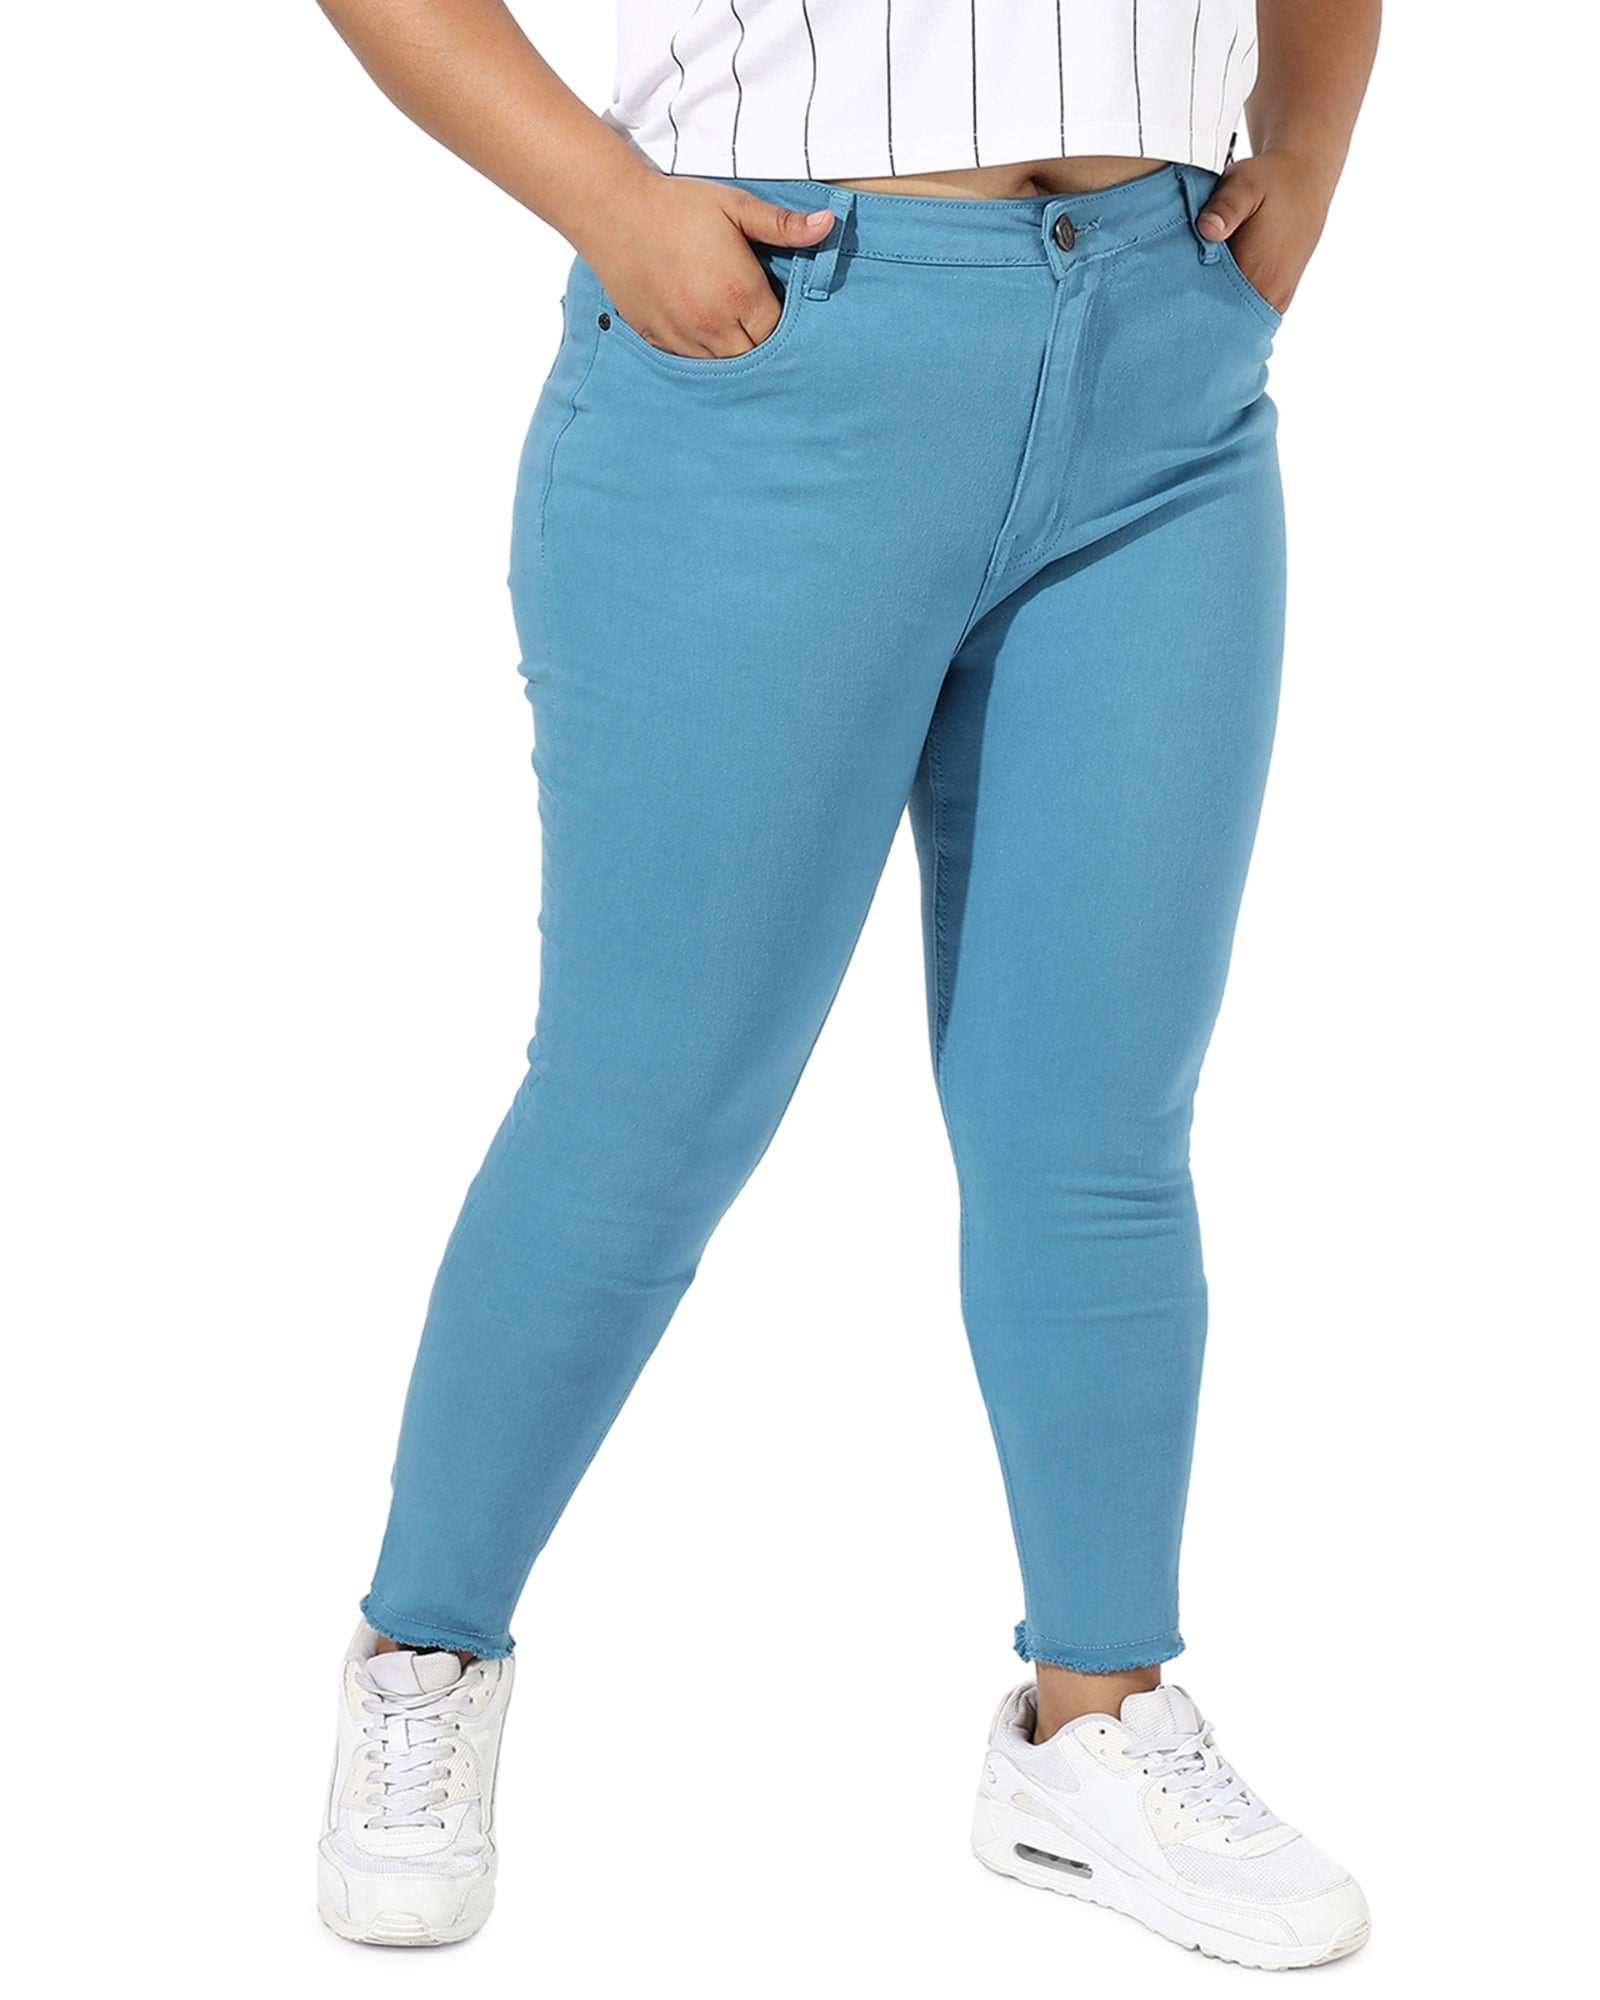 Instafab Plus Size Women Stylish Shaded Casual Navy Blue Jeans